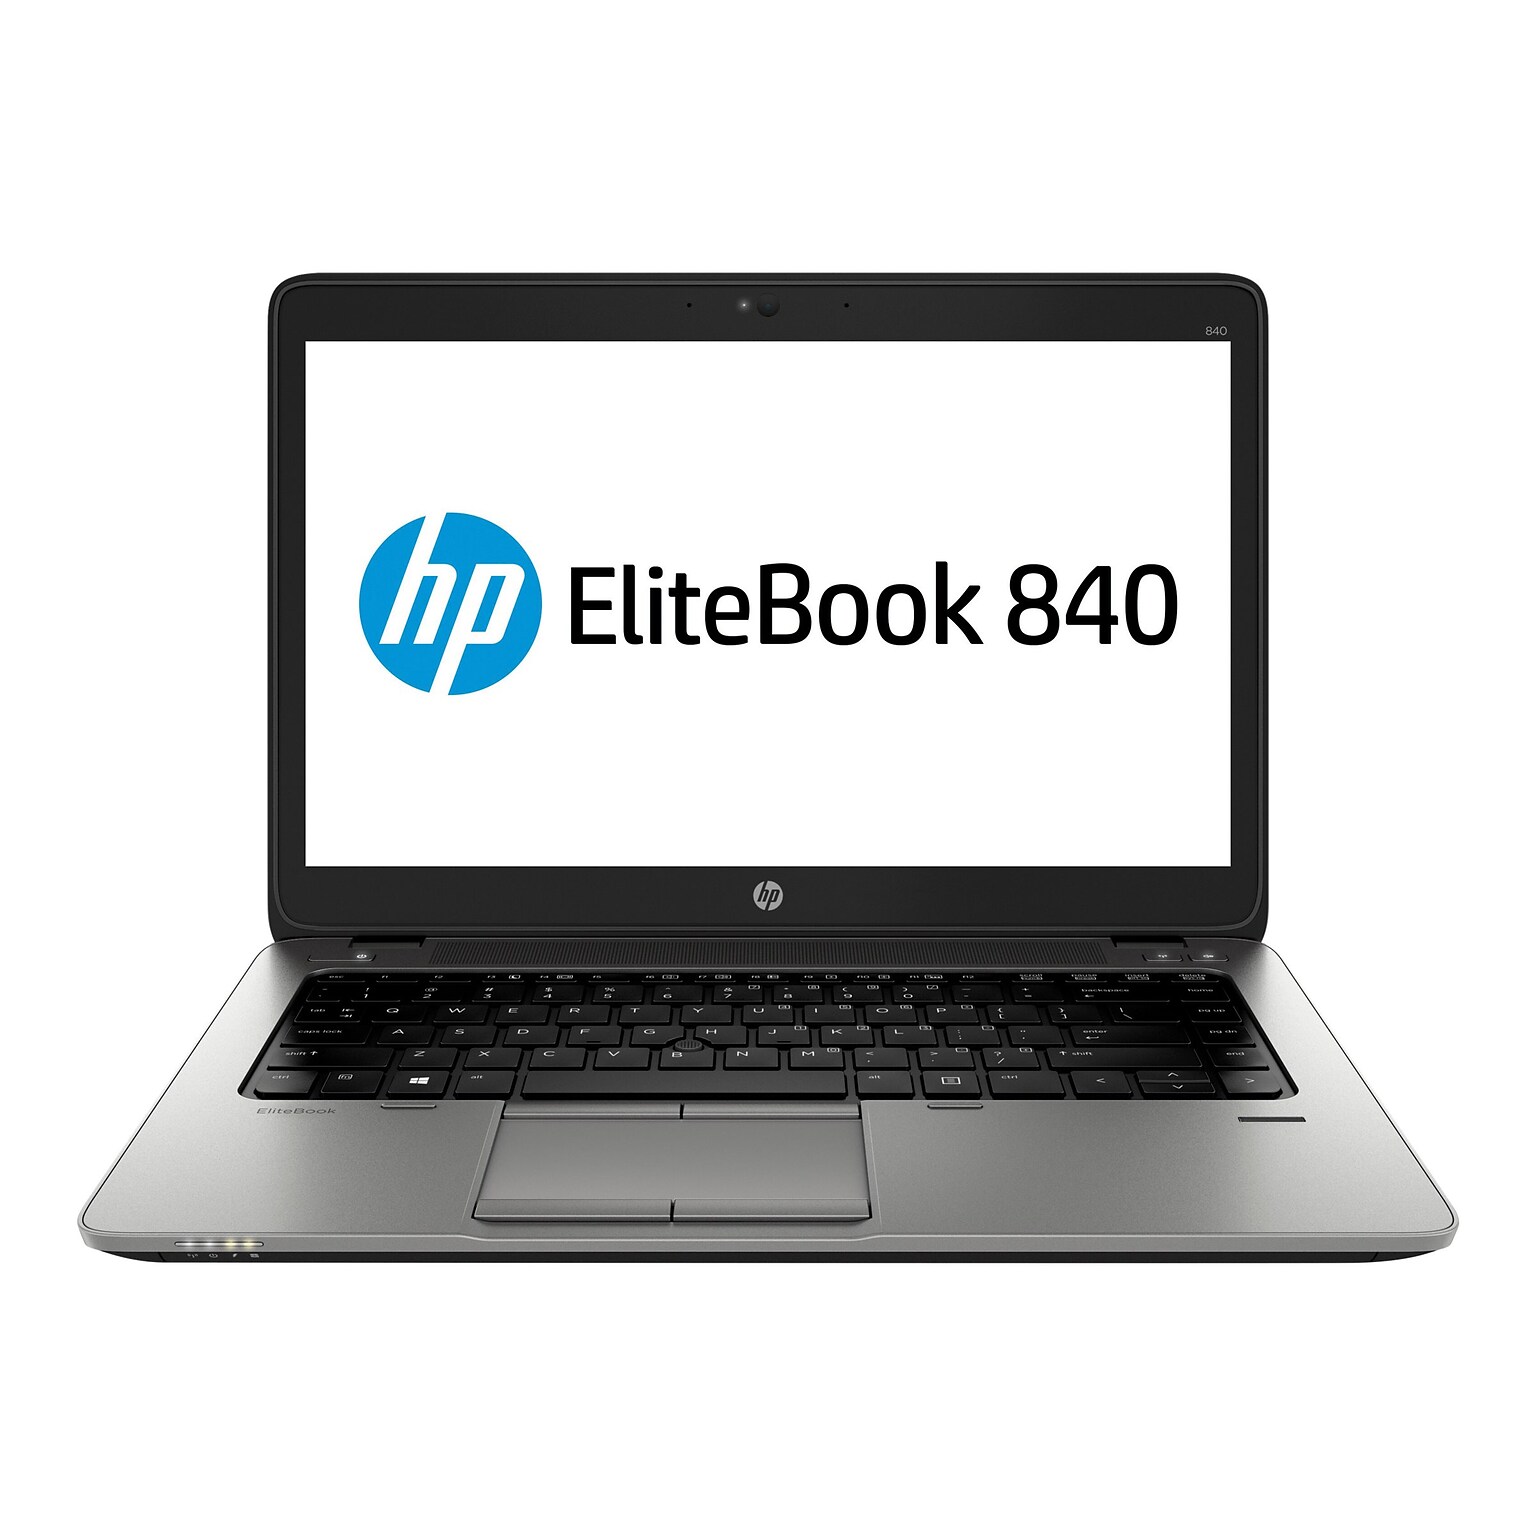 HP EliteBook 840 G2 Refurbished Notebook, Intel i5 2.3GHz Processor, 8GB Memory, 128GB SSD, Windows 10 Pro